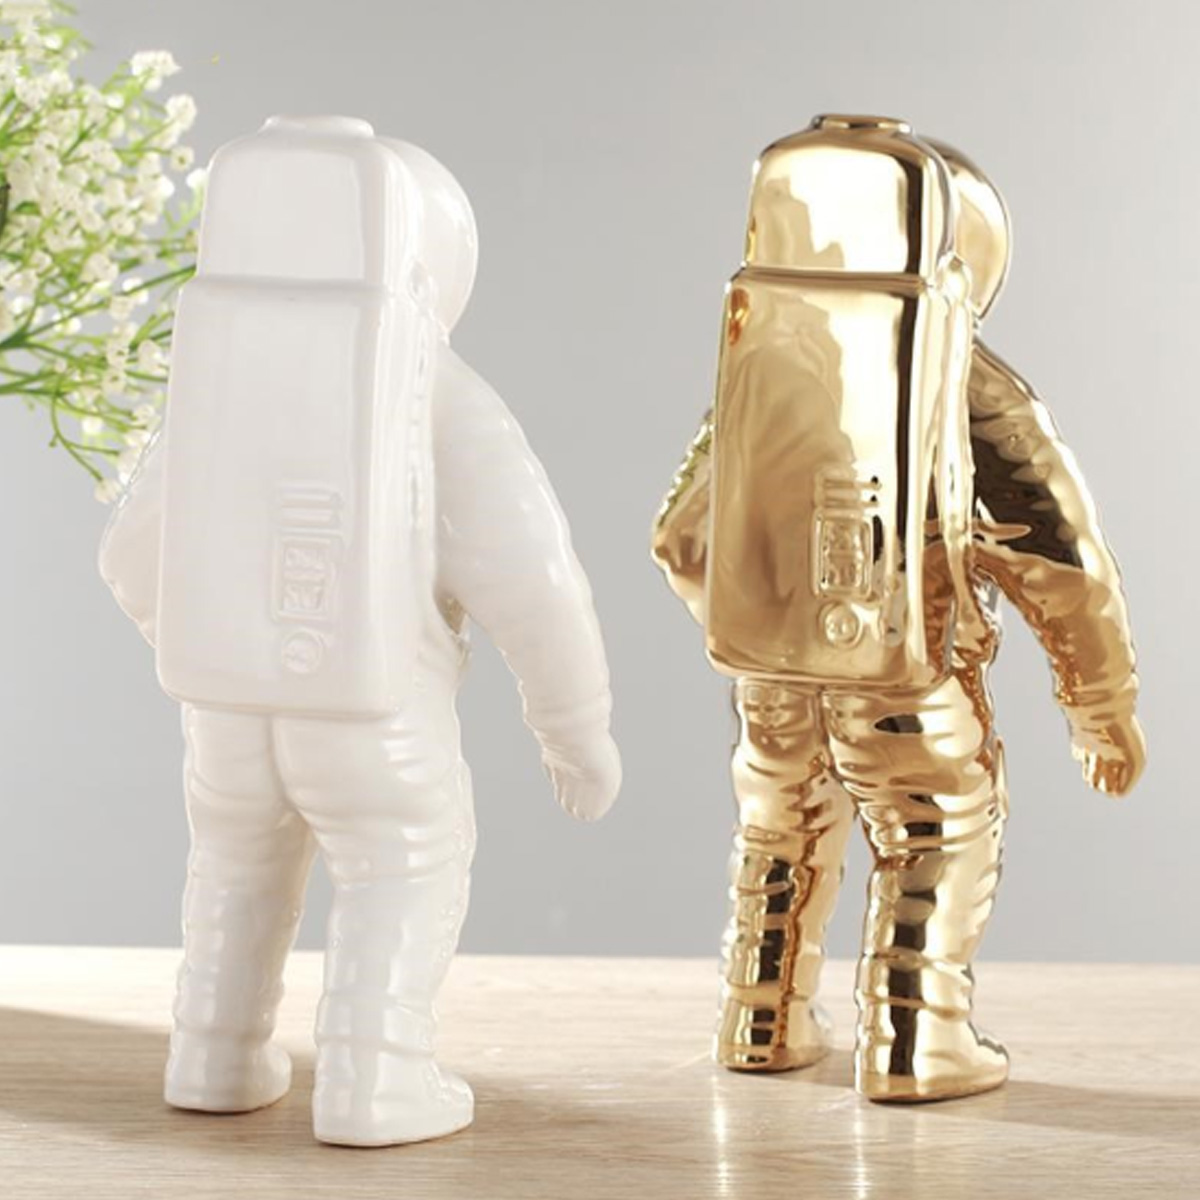 Ceramic-Space-Man-Sculpture-Astronaut-Cosmonaut-Vase-Ornament-Statue-Money-Pot-1520772-6